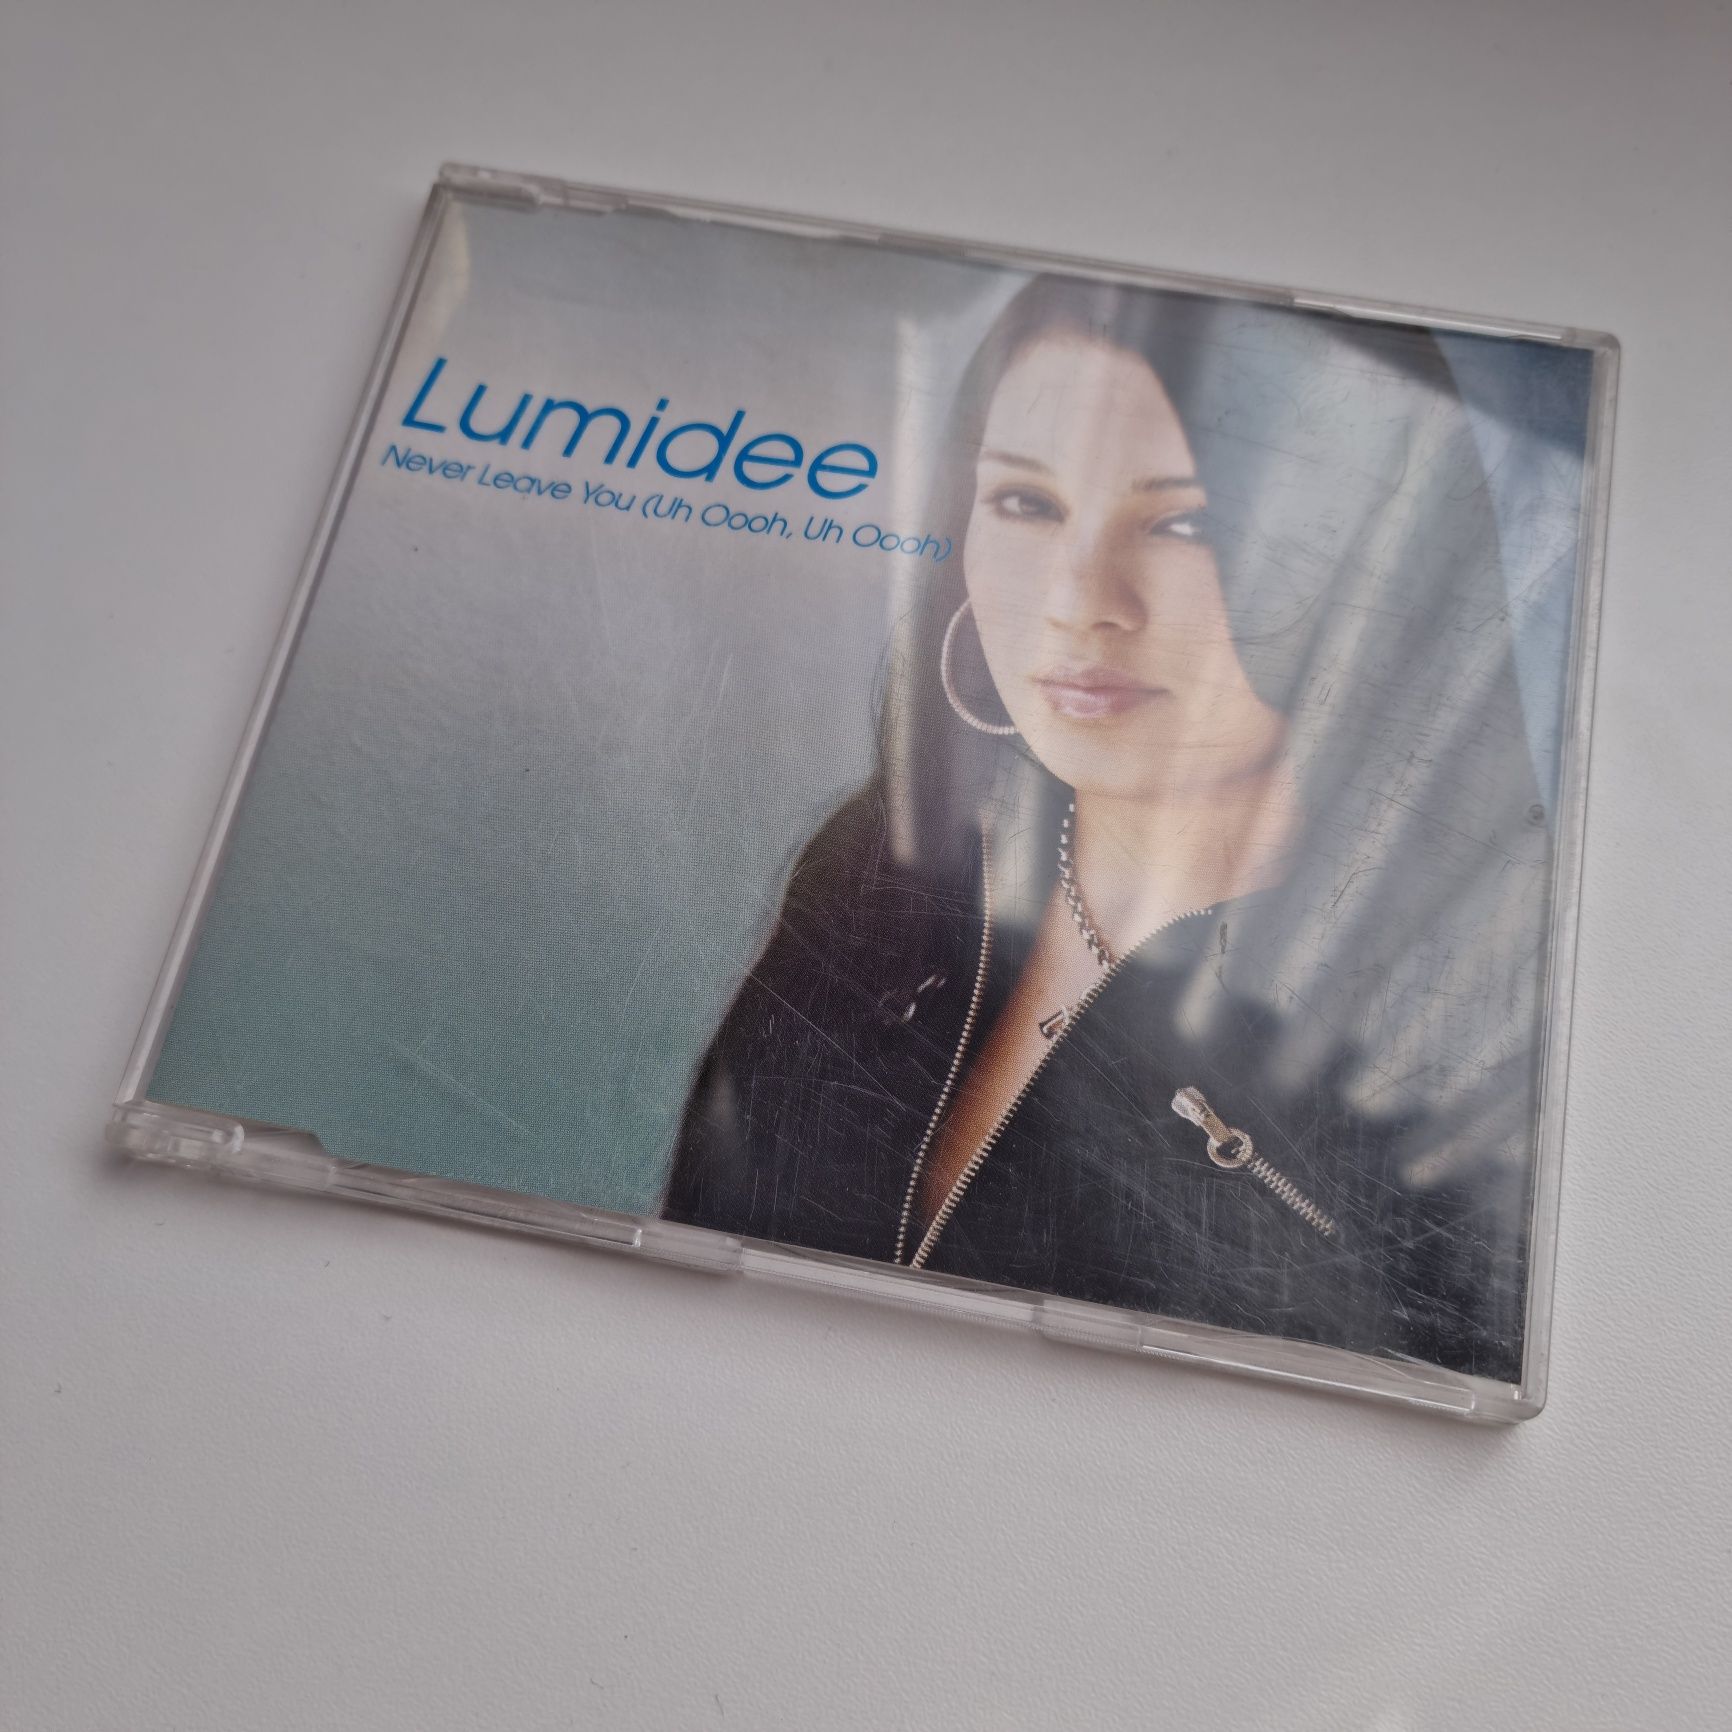 Lumidee – Never Leave You (Uh Oooh, Uh Oooh) / Singiel CD